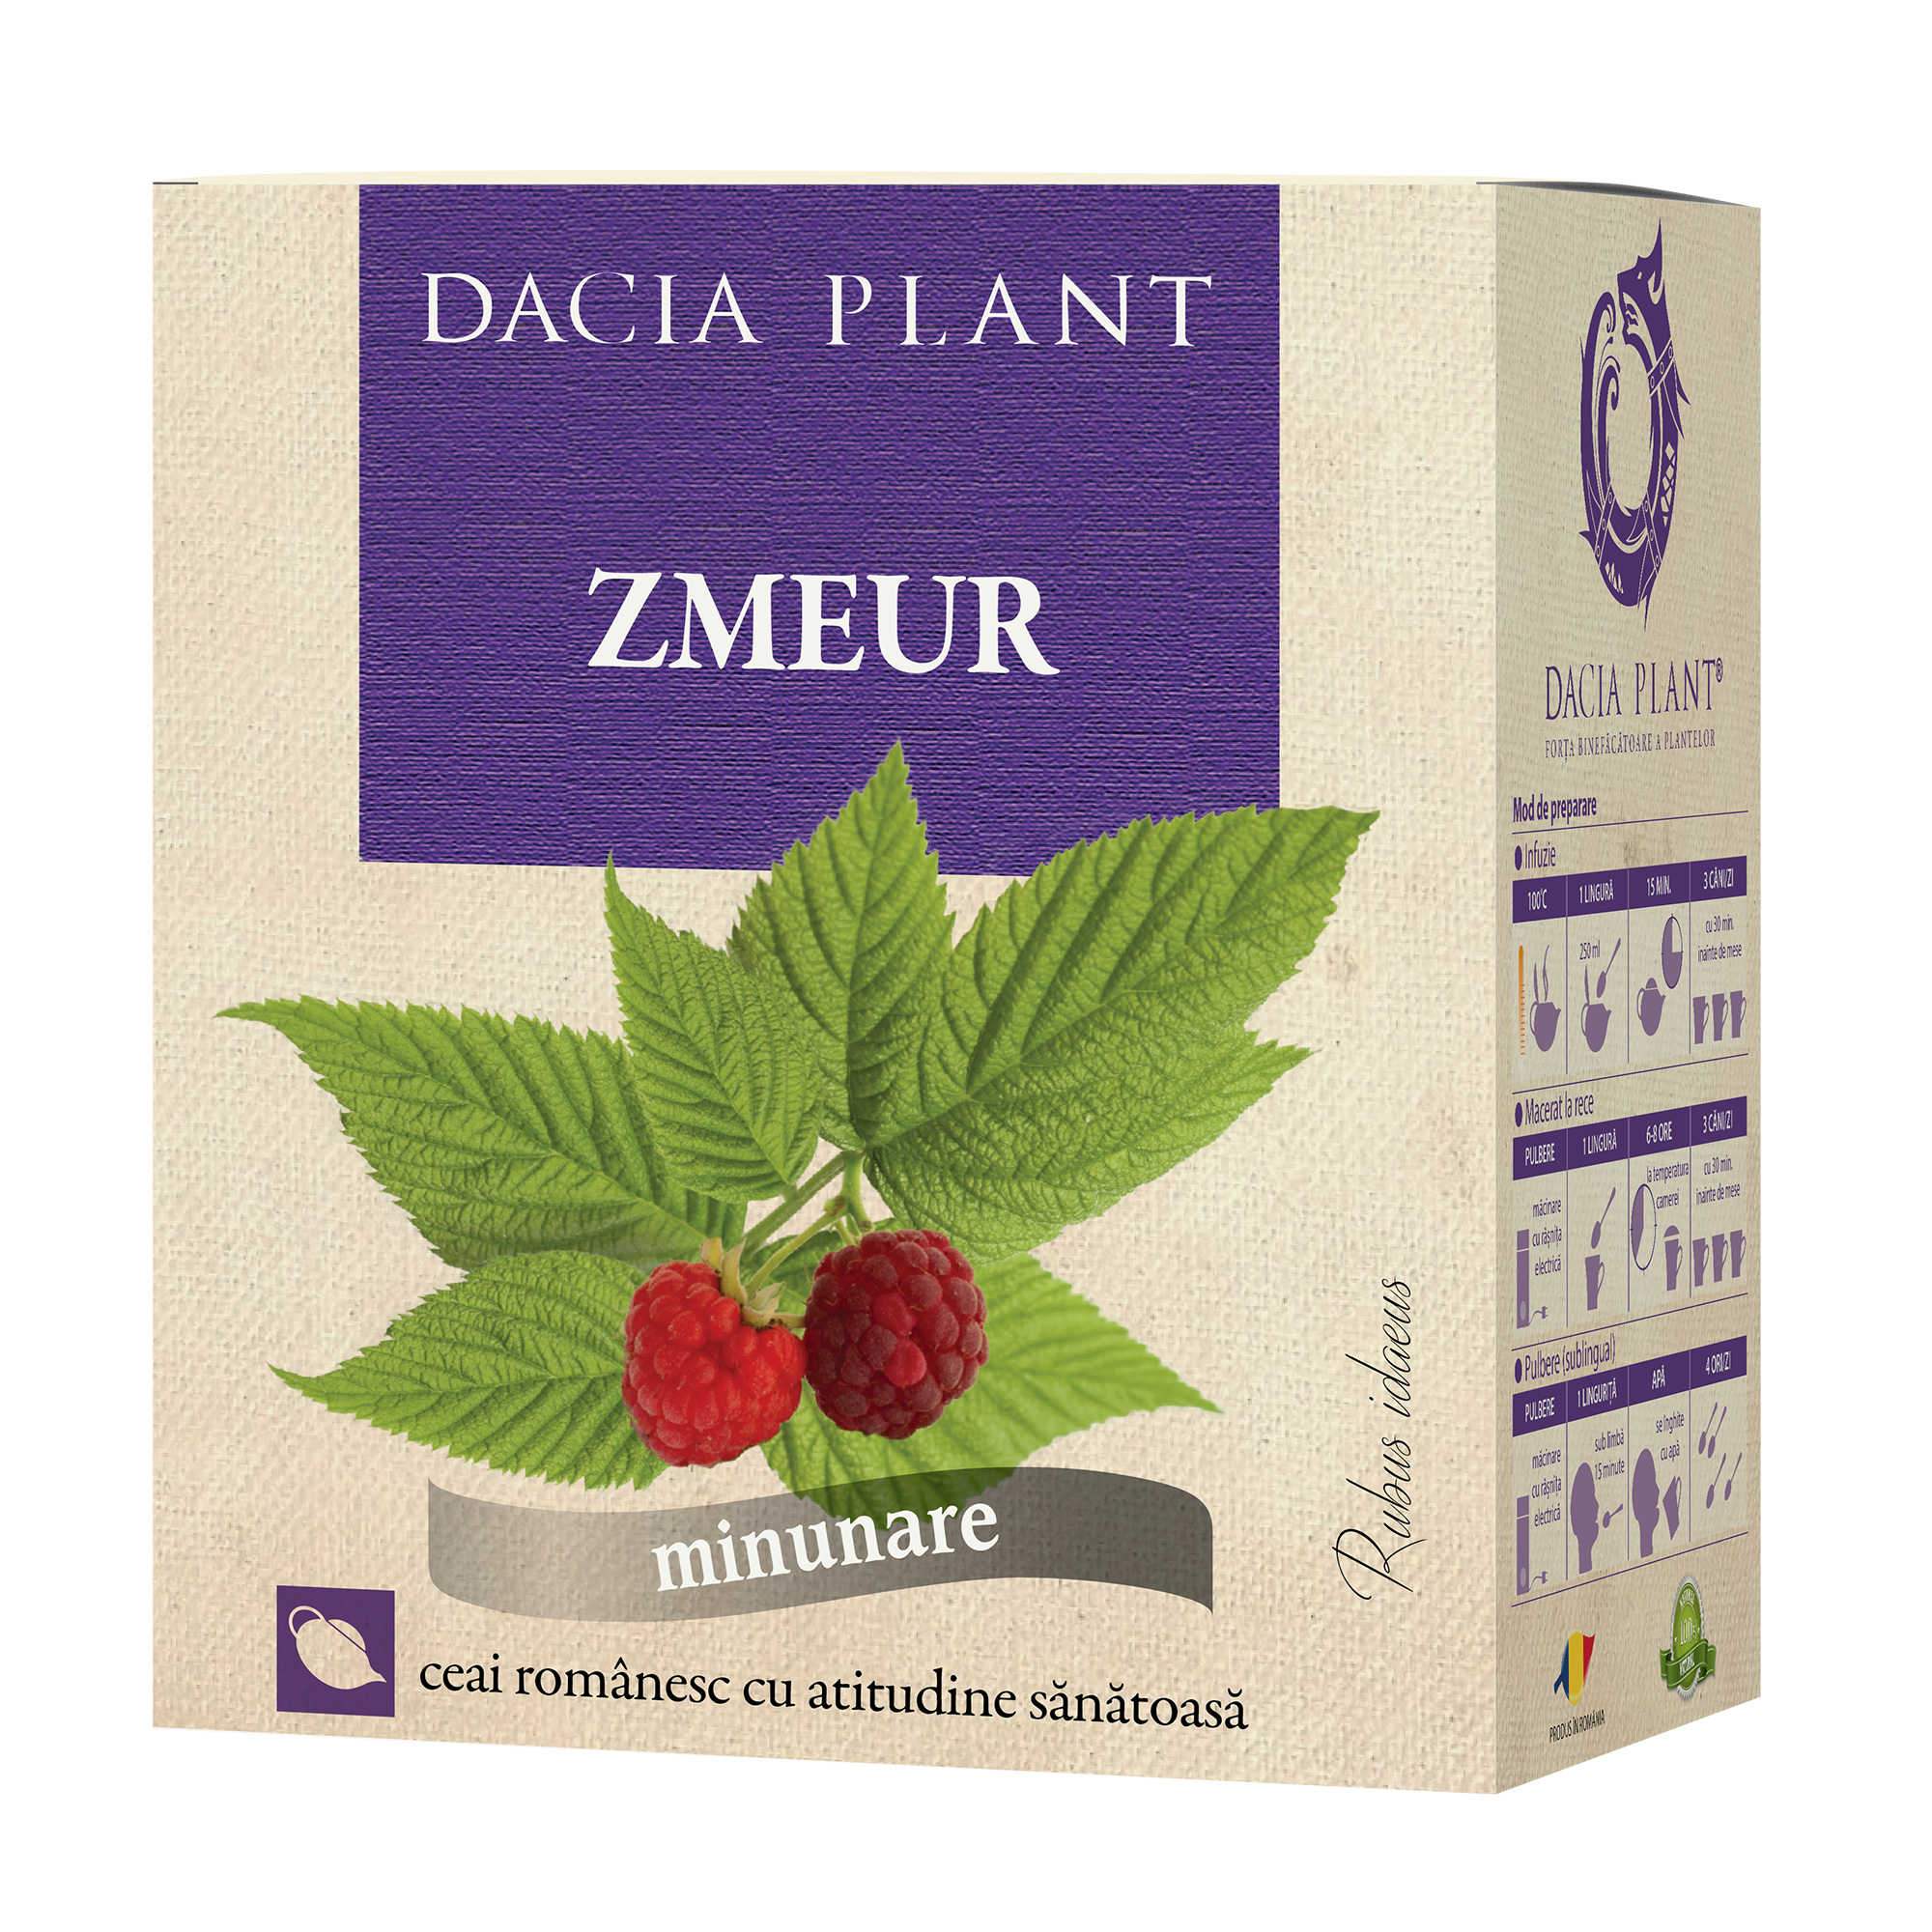 Ceai de zmeur, 50 g, Dacia Plant